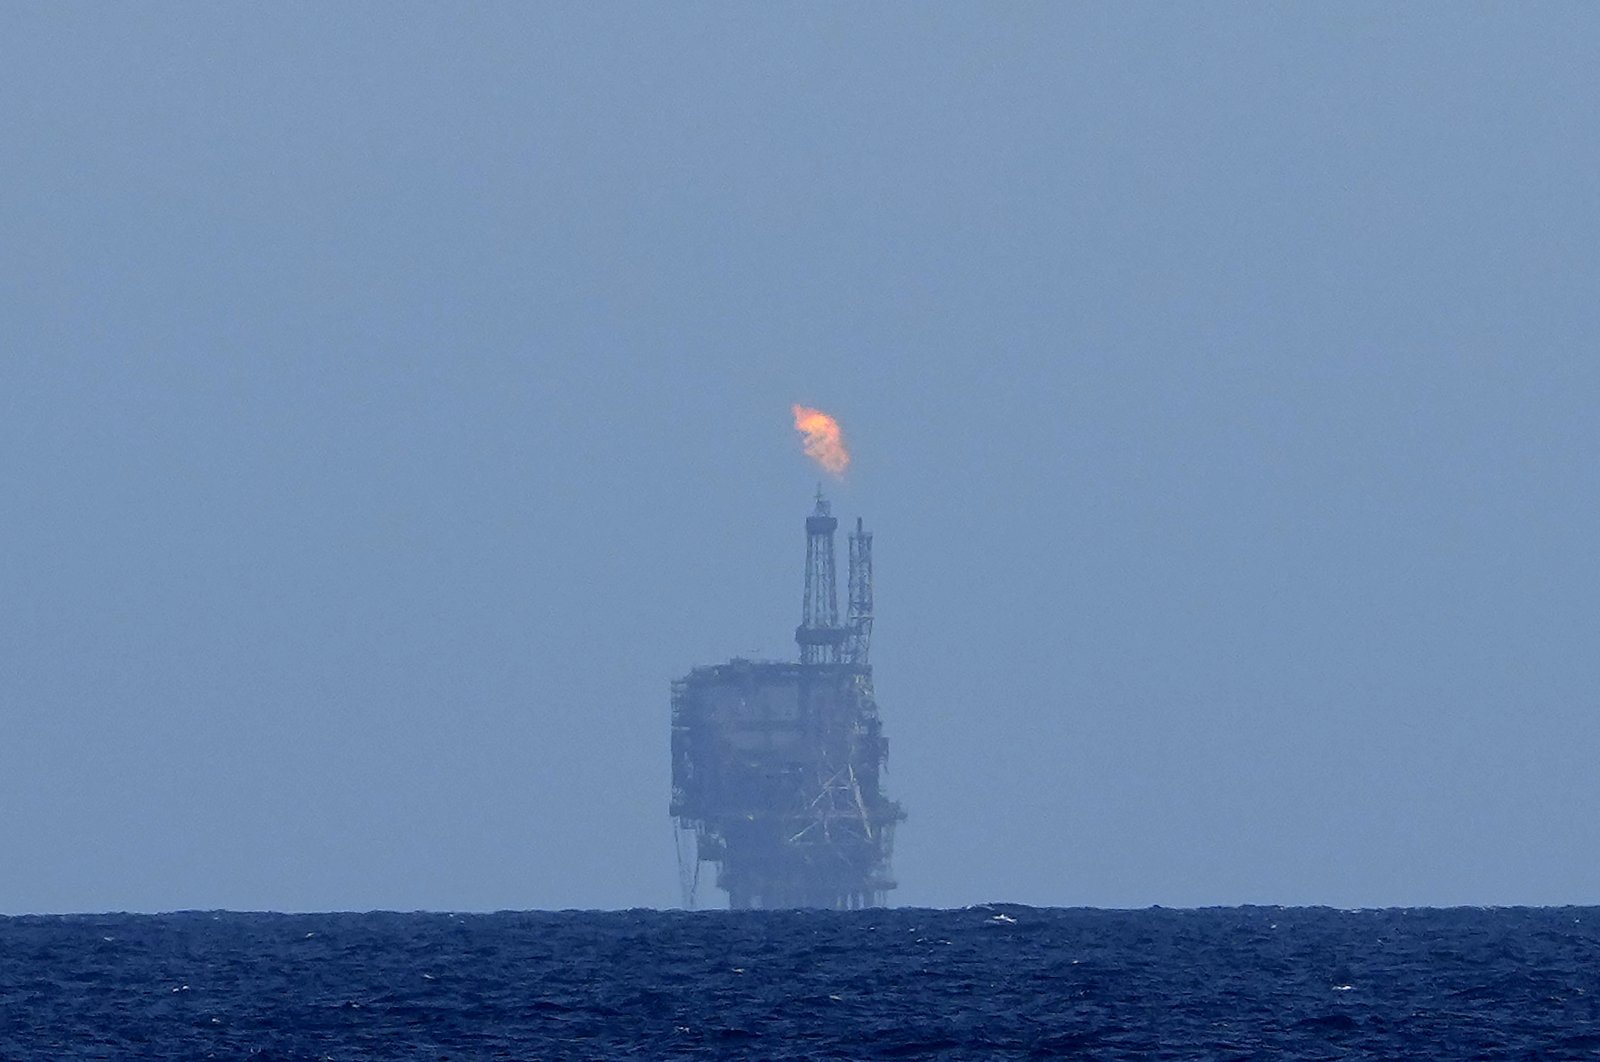 An oil platform is visible on the horizon in international waters near Libya, Mediterranean Sea, Sept.17, 2022. (AP Photo)